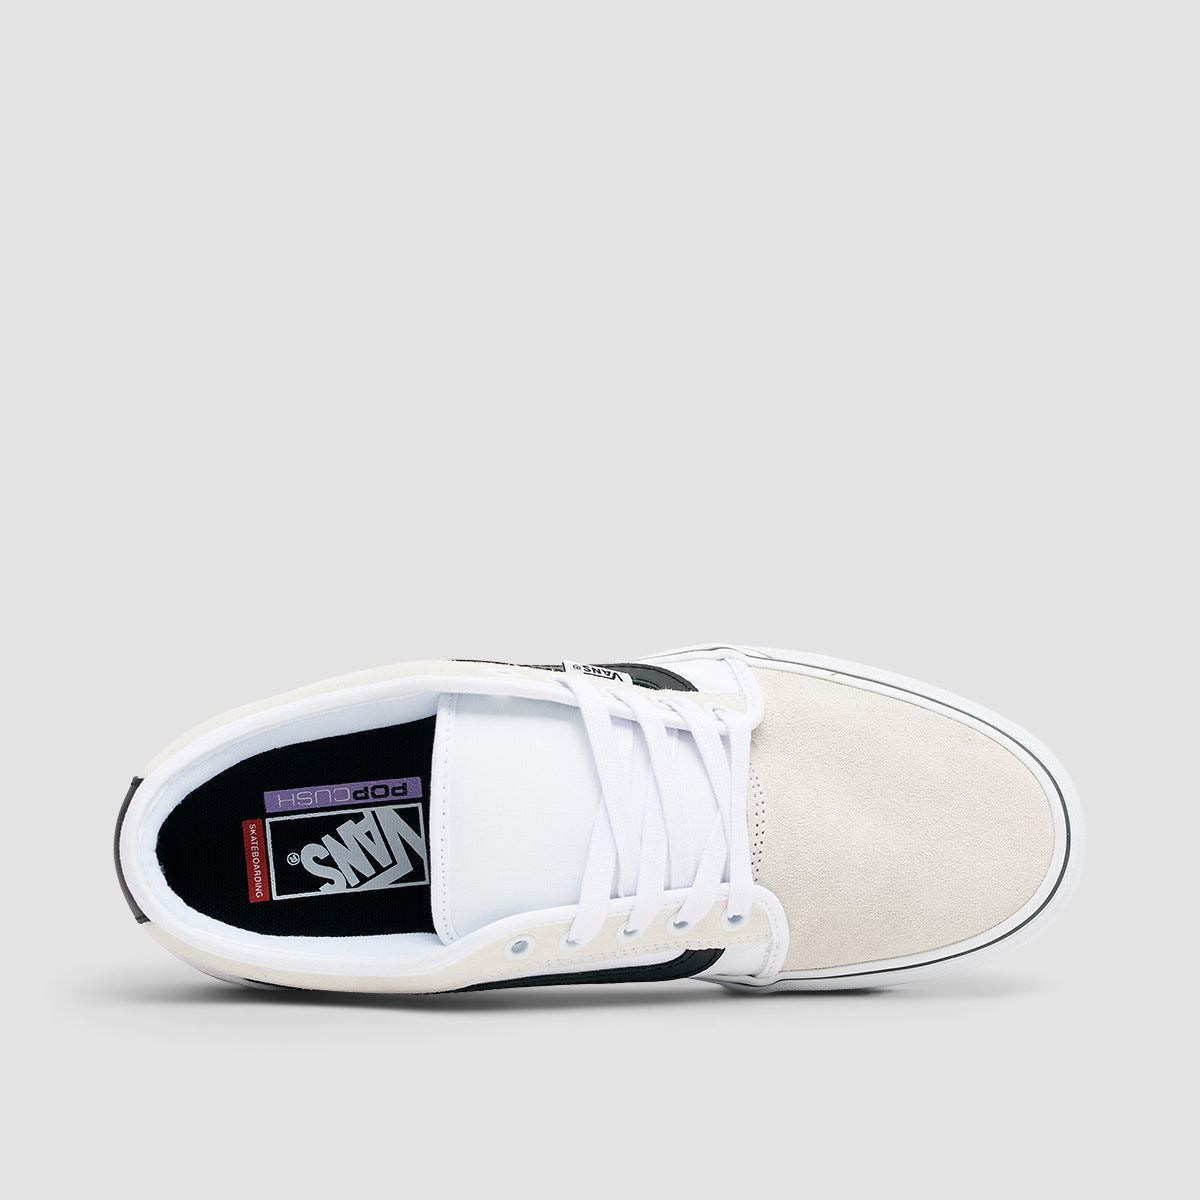 Vans Chukka Low Sidestripe Shoes - White/Black/Gum